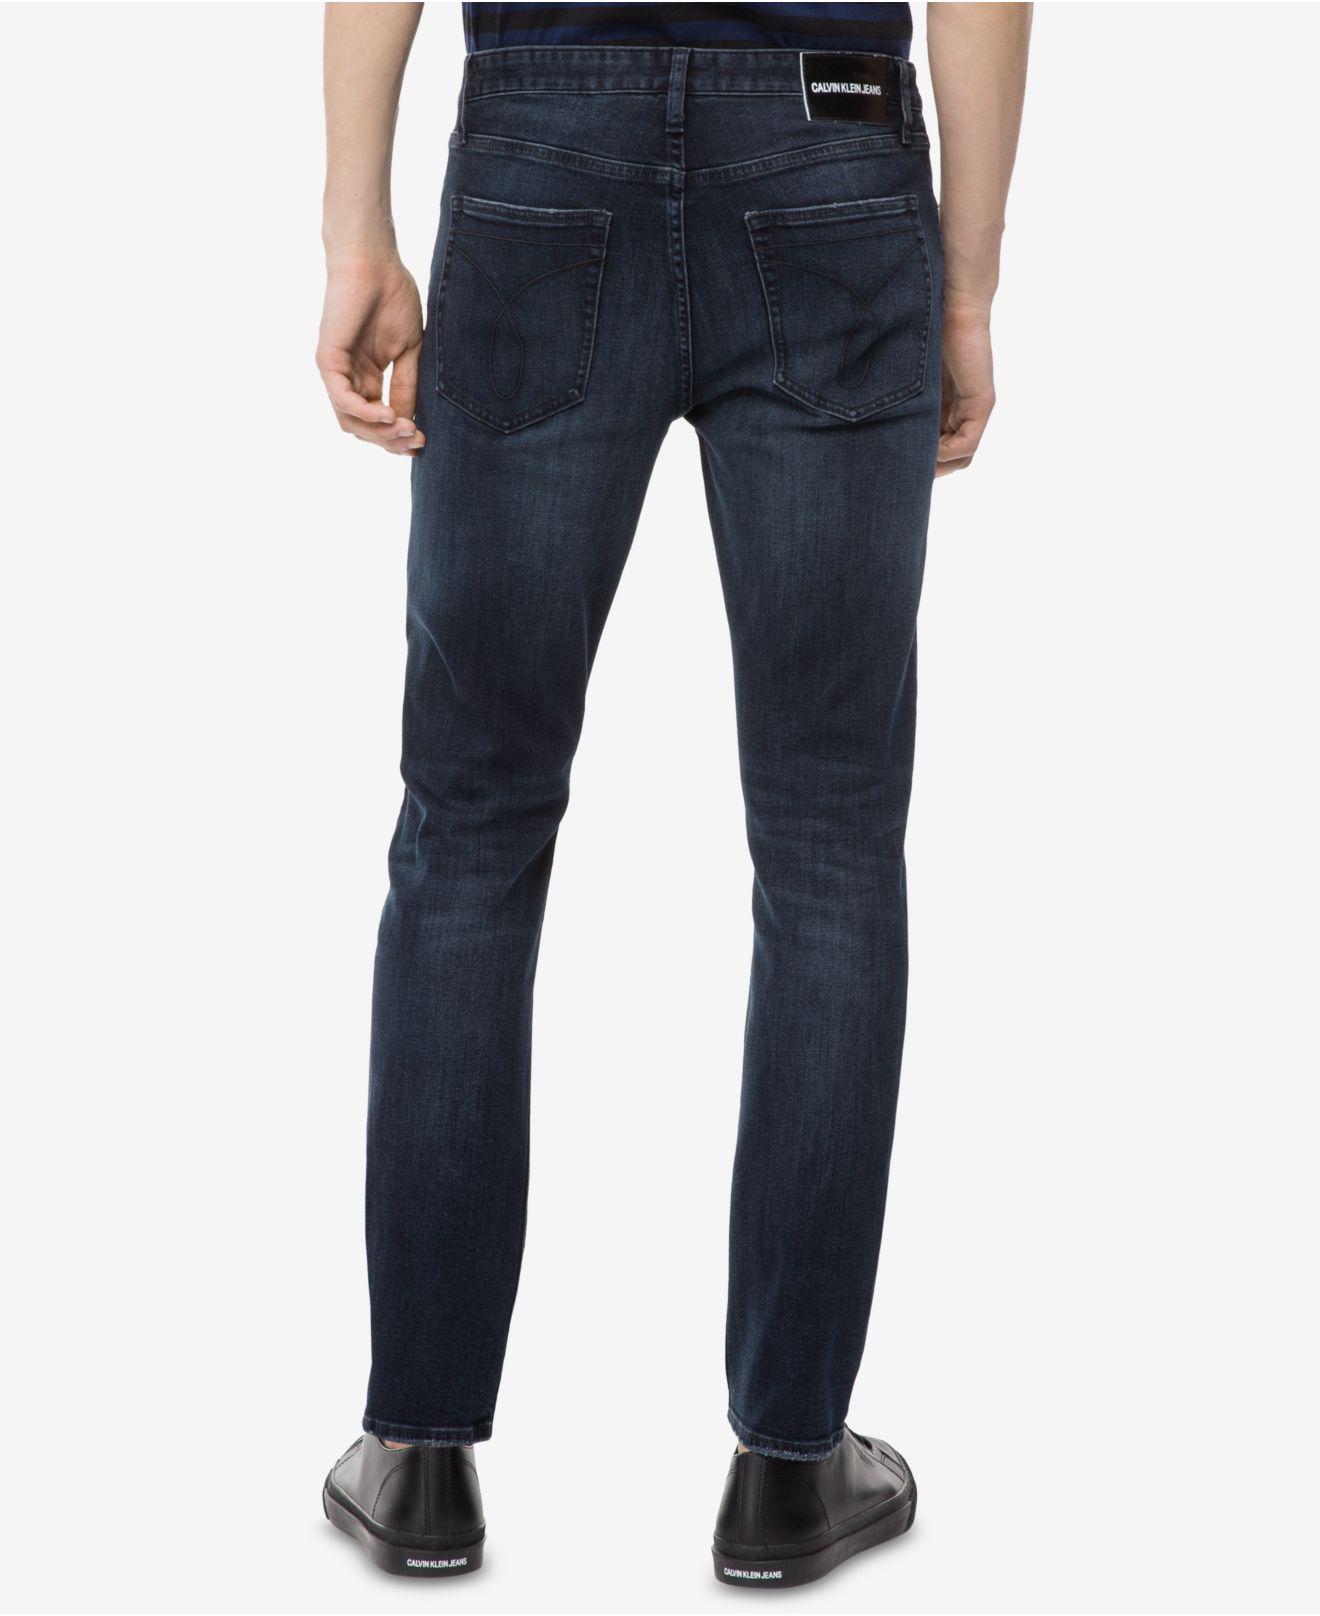 Calvin Klein Denim Slim-fit Jeans in Blue for Men - Lyst